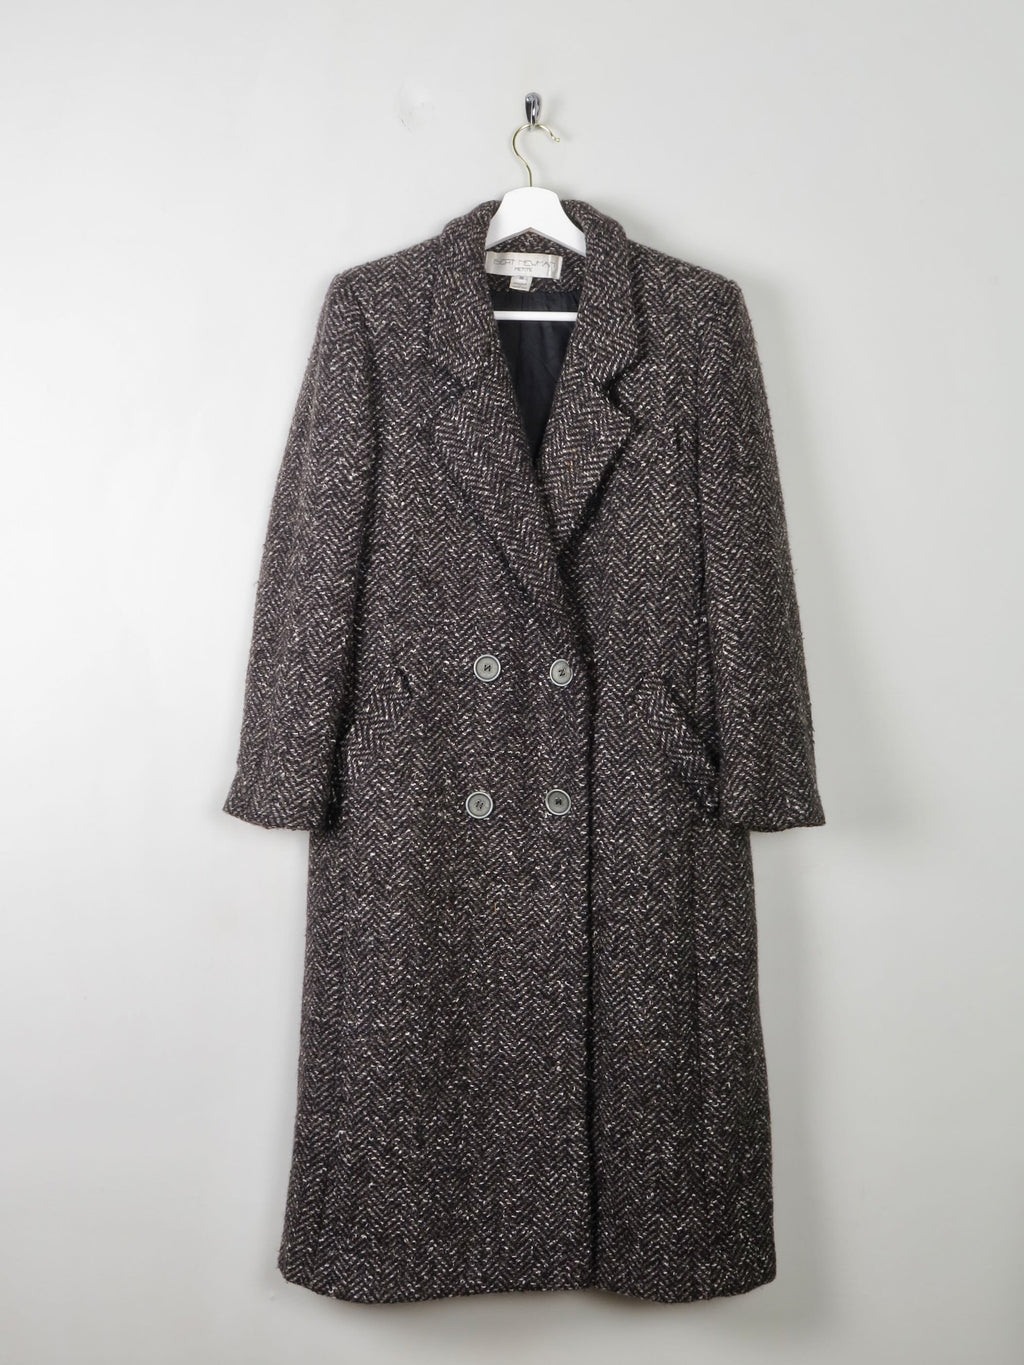 Women's Vintage Brown Tweed Coat M Petit Bert Newman - The Harlequin